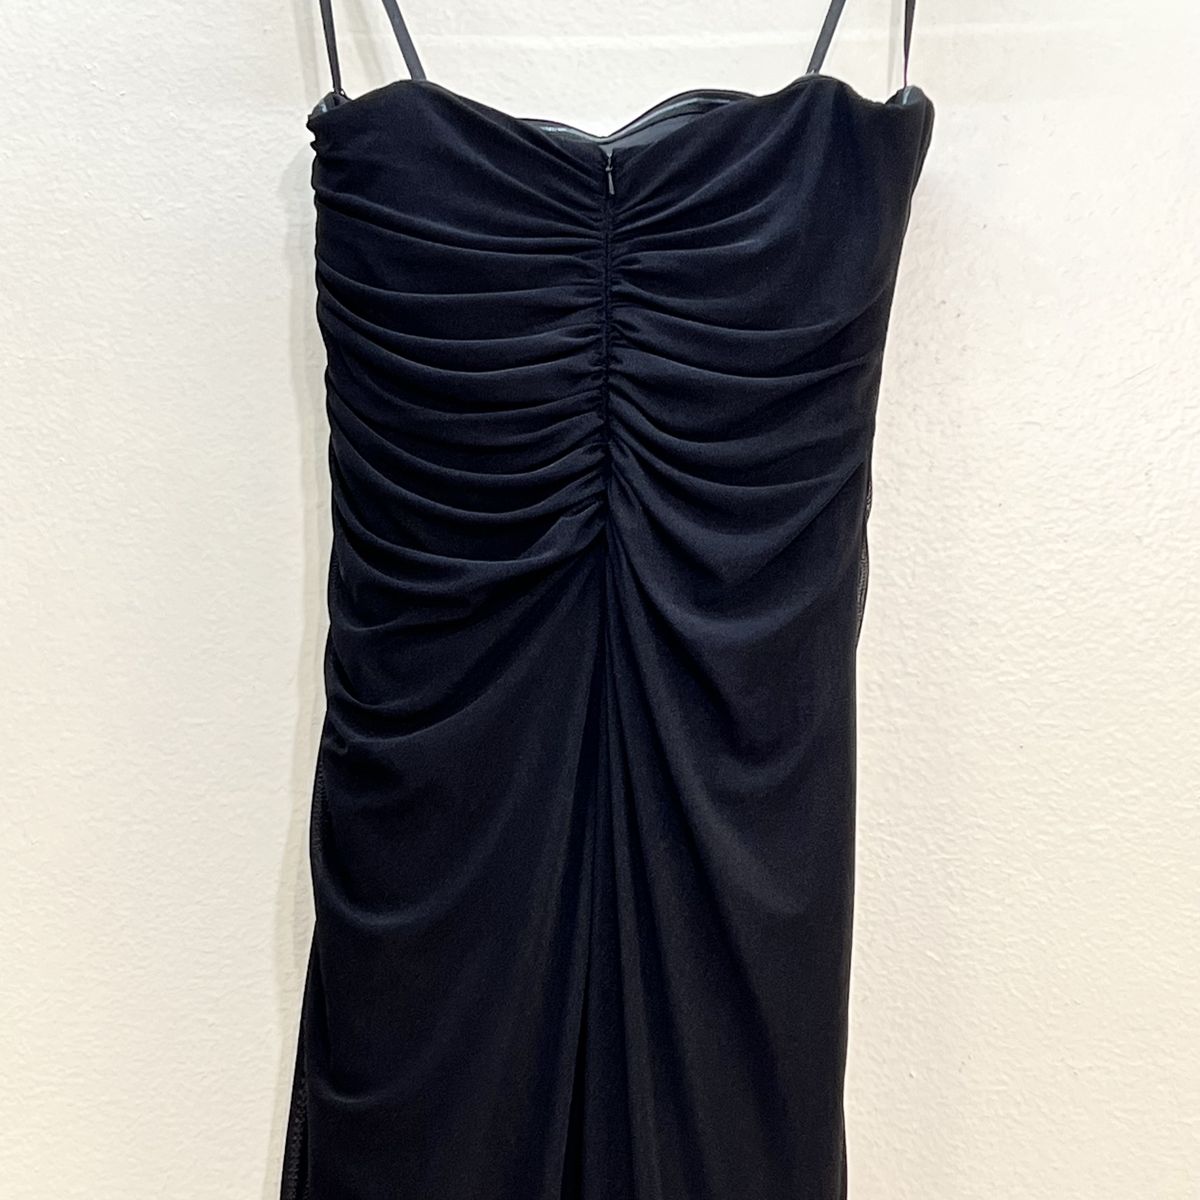 Style 29489 La Femme Size 6 Strapless Black Side Slit Dress on Queenly